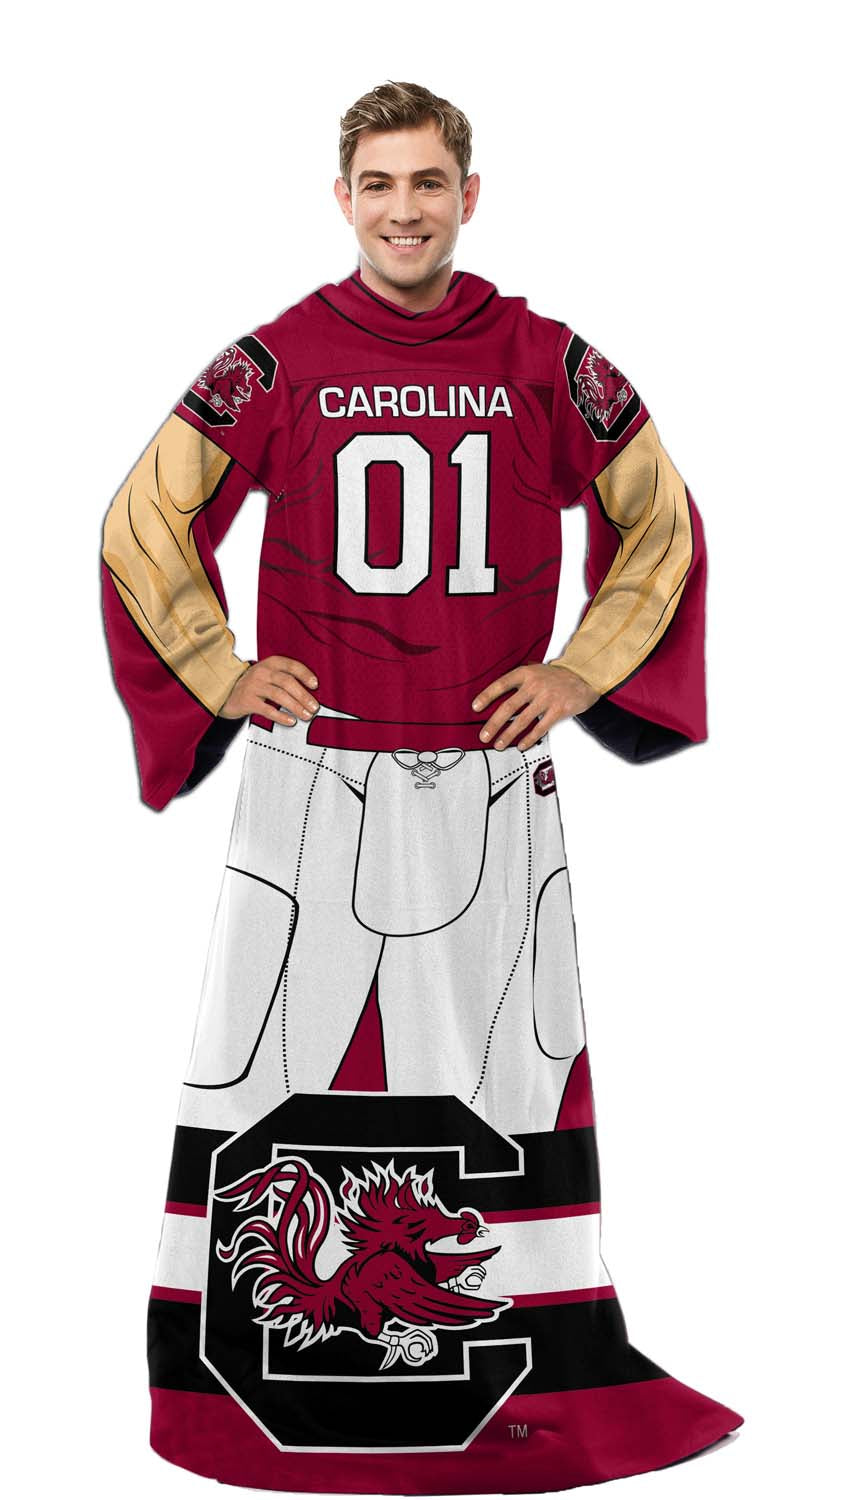 South Carolina Gamecocks NCAA Team Wearable Blanket with Sleeves - Maroon